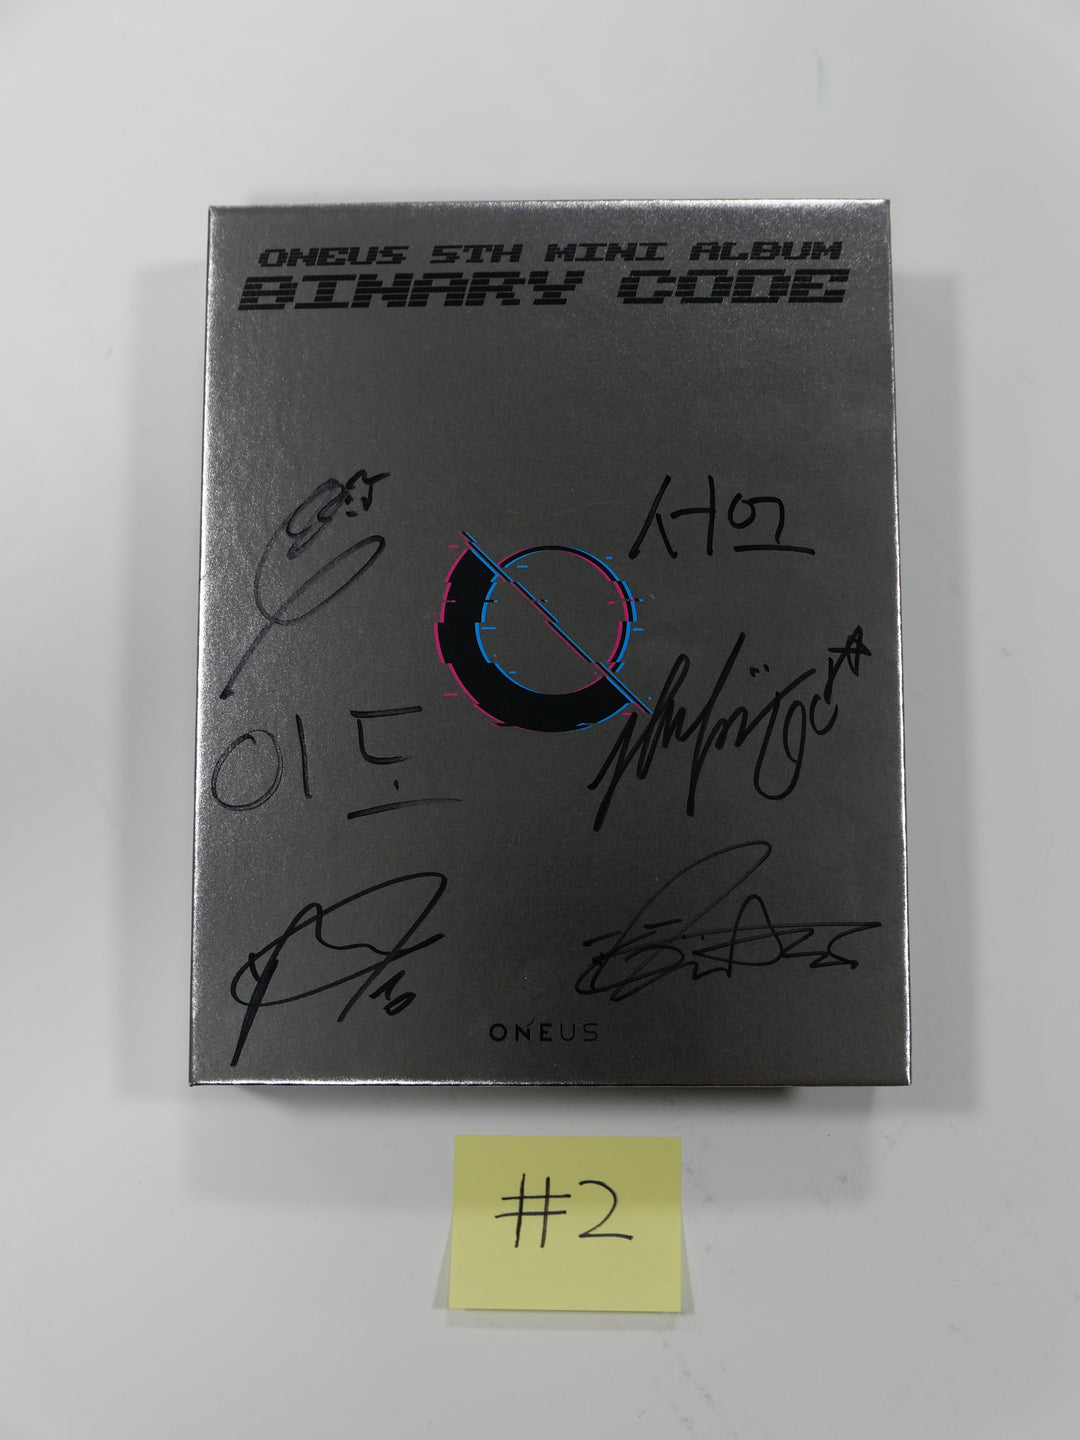 Oneus "Binary Code" 5th Mini - Hand Autographed(Signed) Promo Album